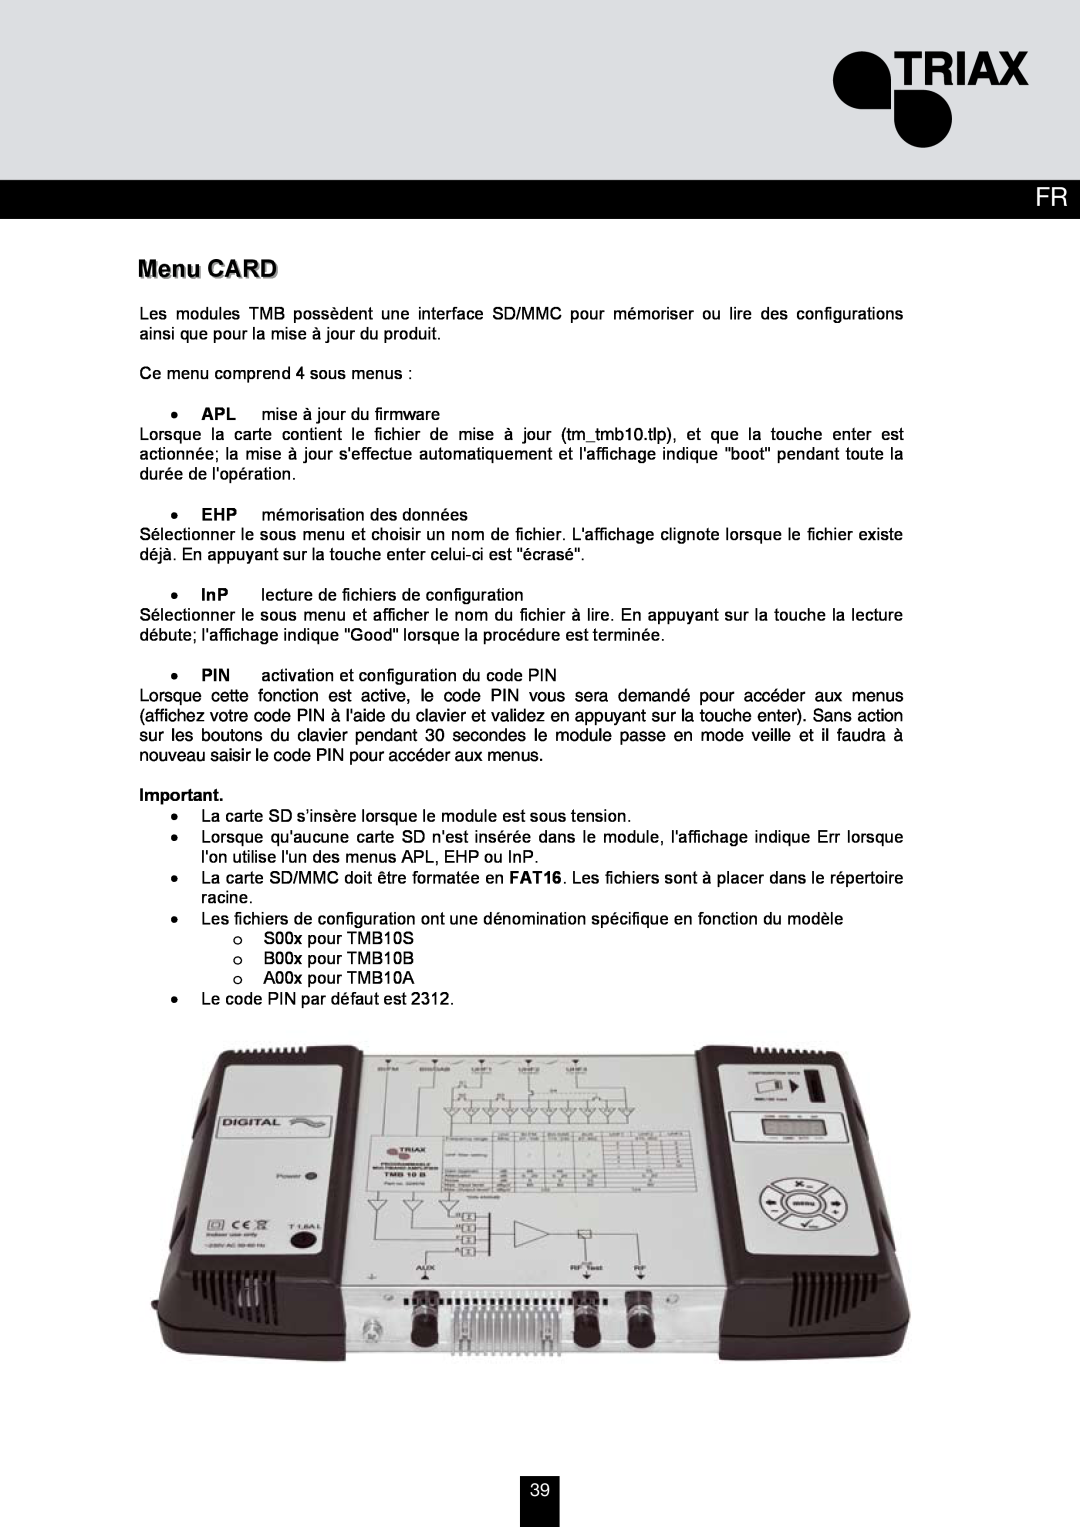 Triax 324577, 324576, 324575 manual Menu CARD 